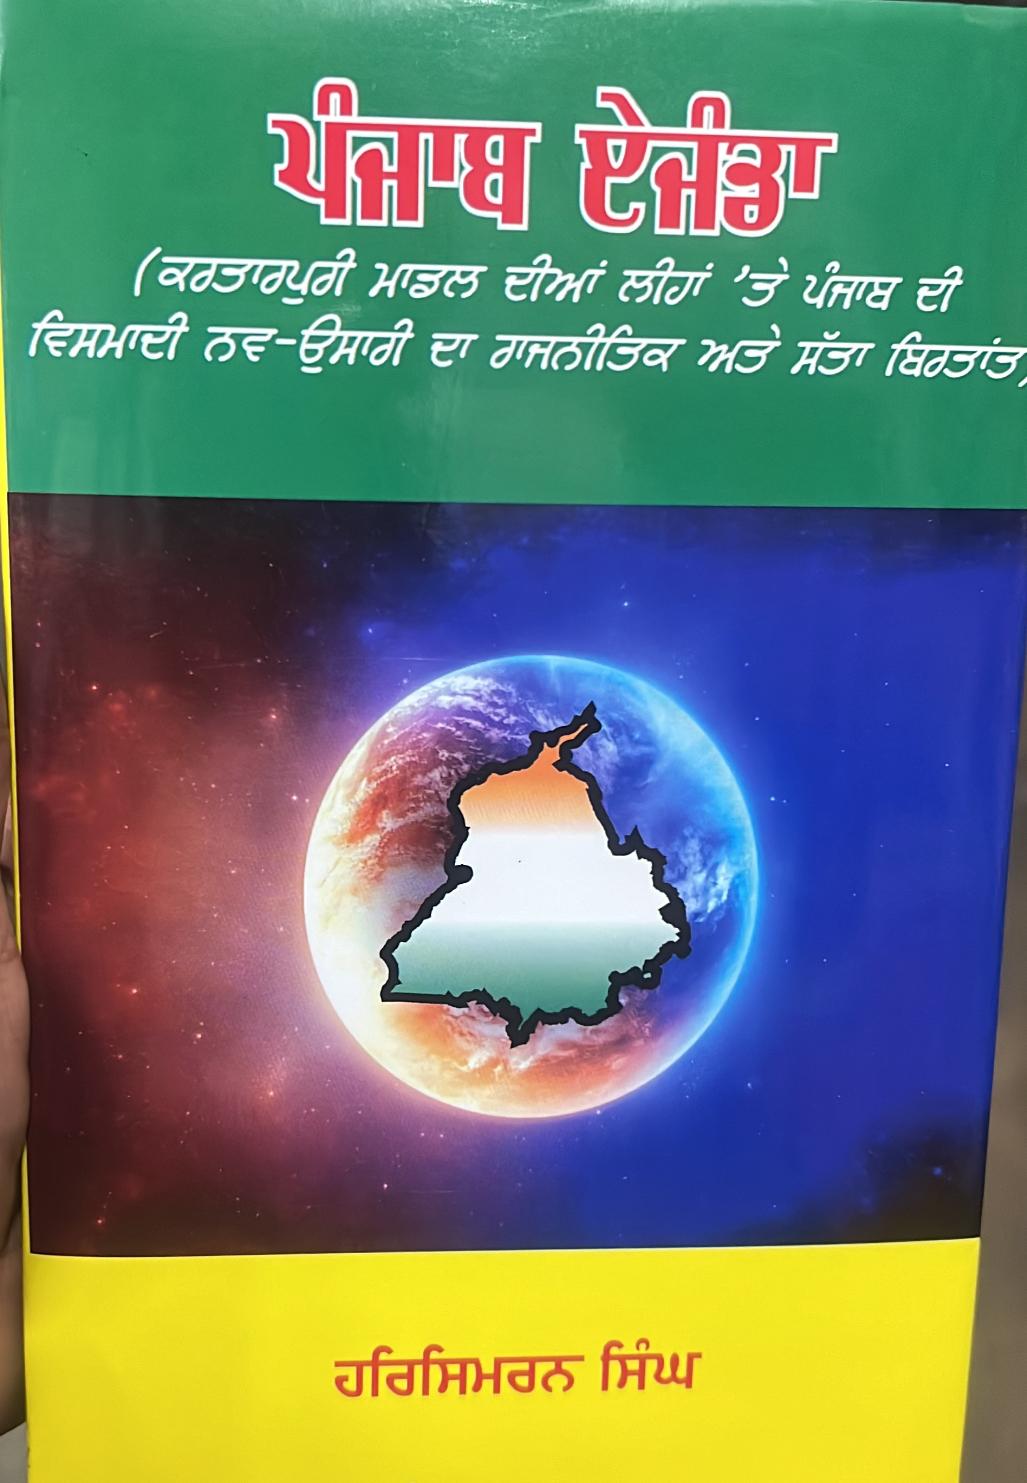 Punjab agenda 